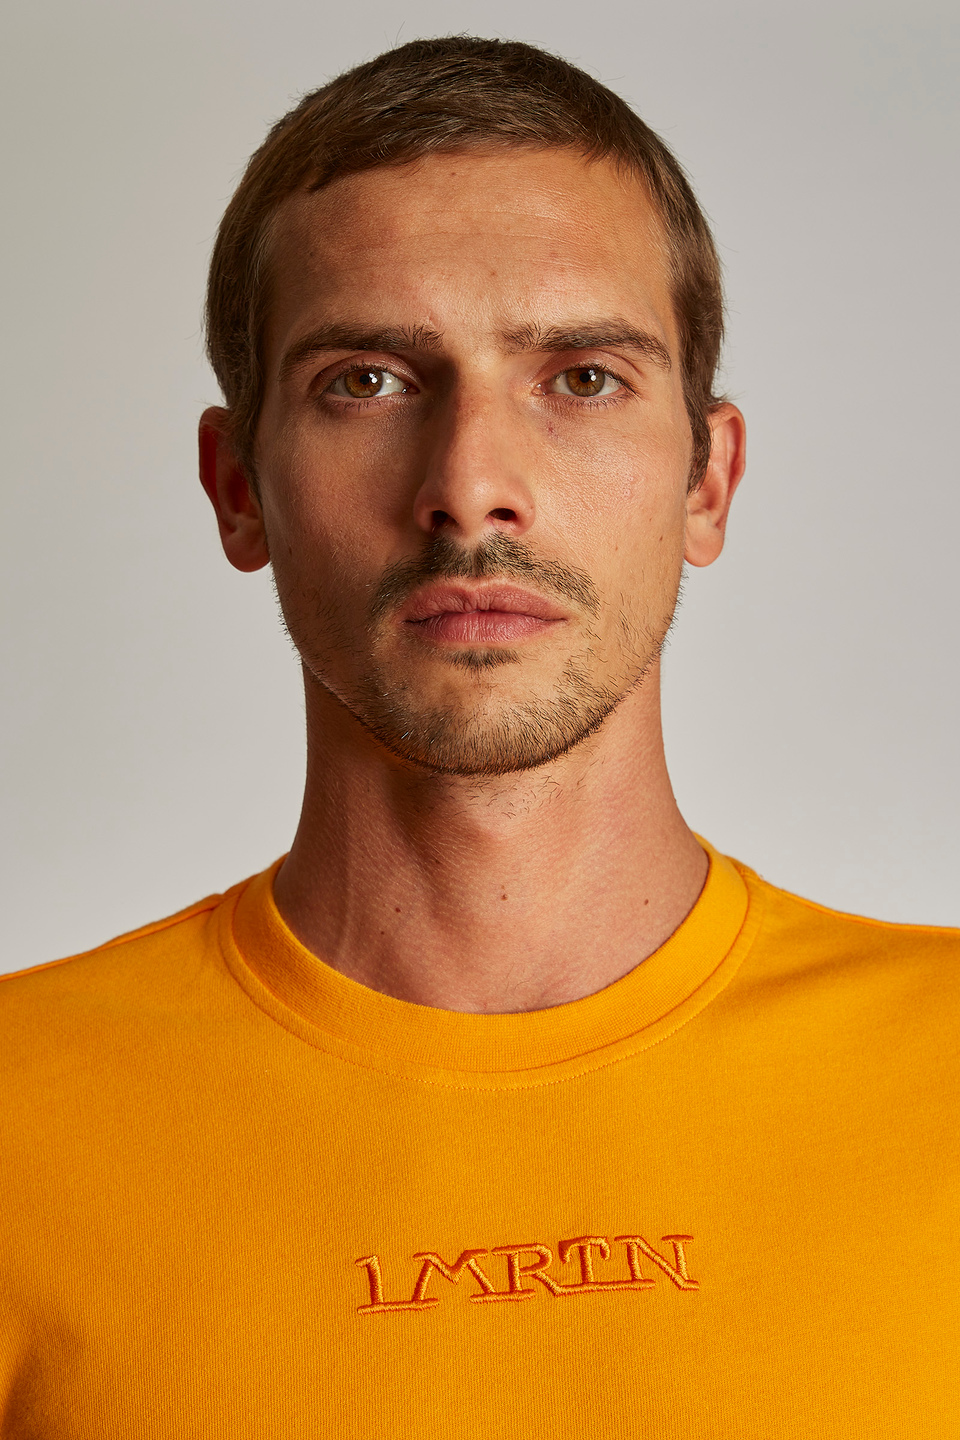 Herren-T-Shirt mit kurzem Arm aus Baumwolle, oversized Modell | La Martina - Official Online Shop